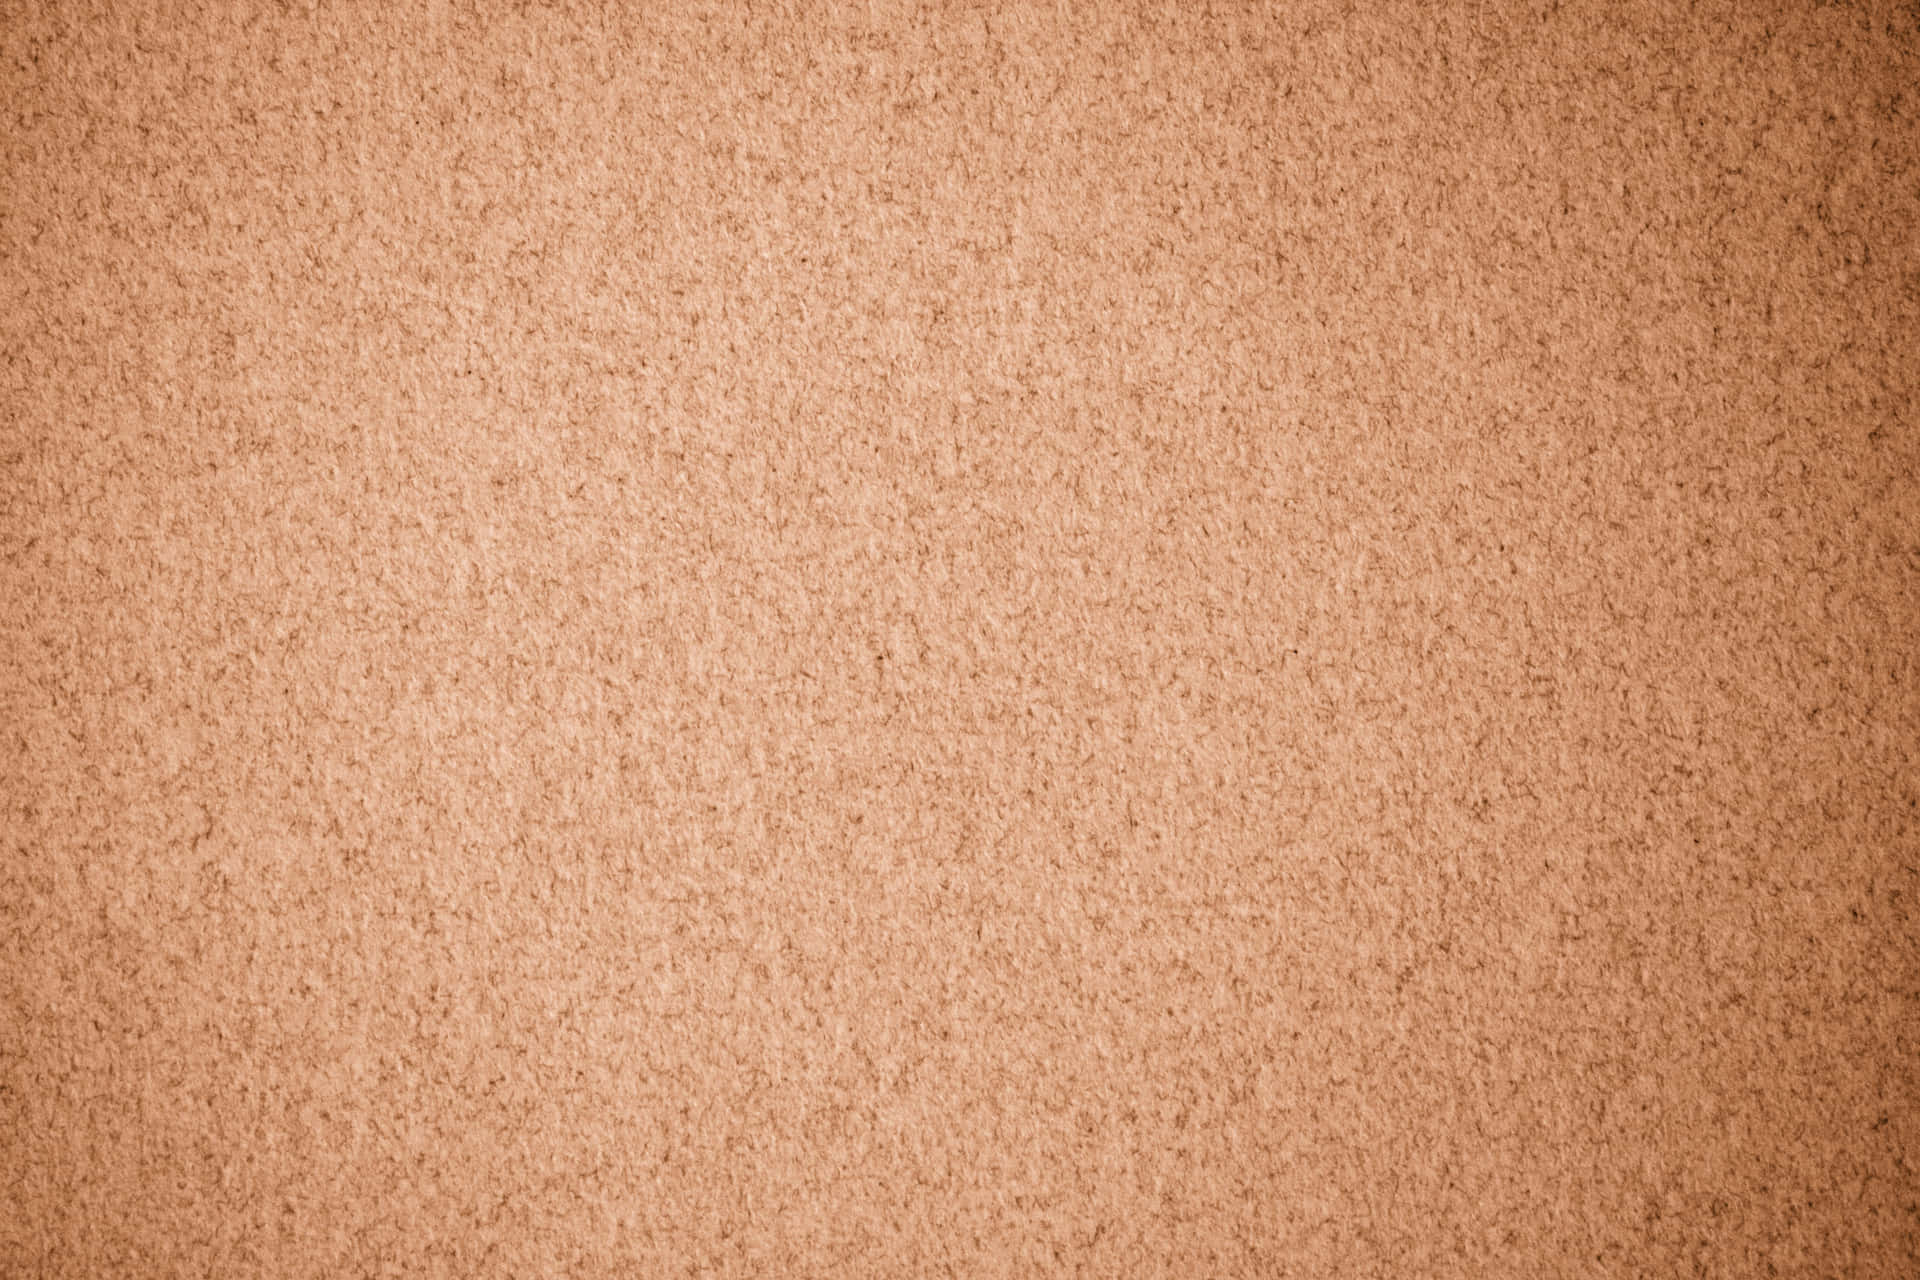 Brown textured paper background